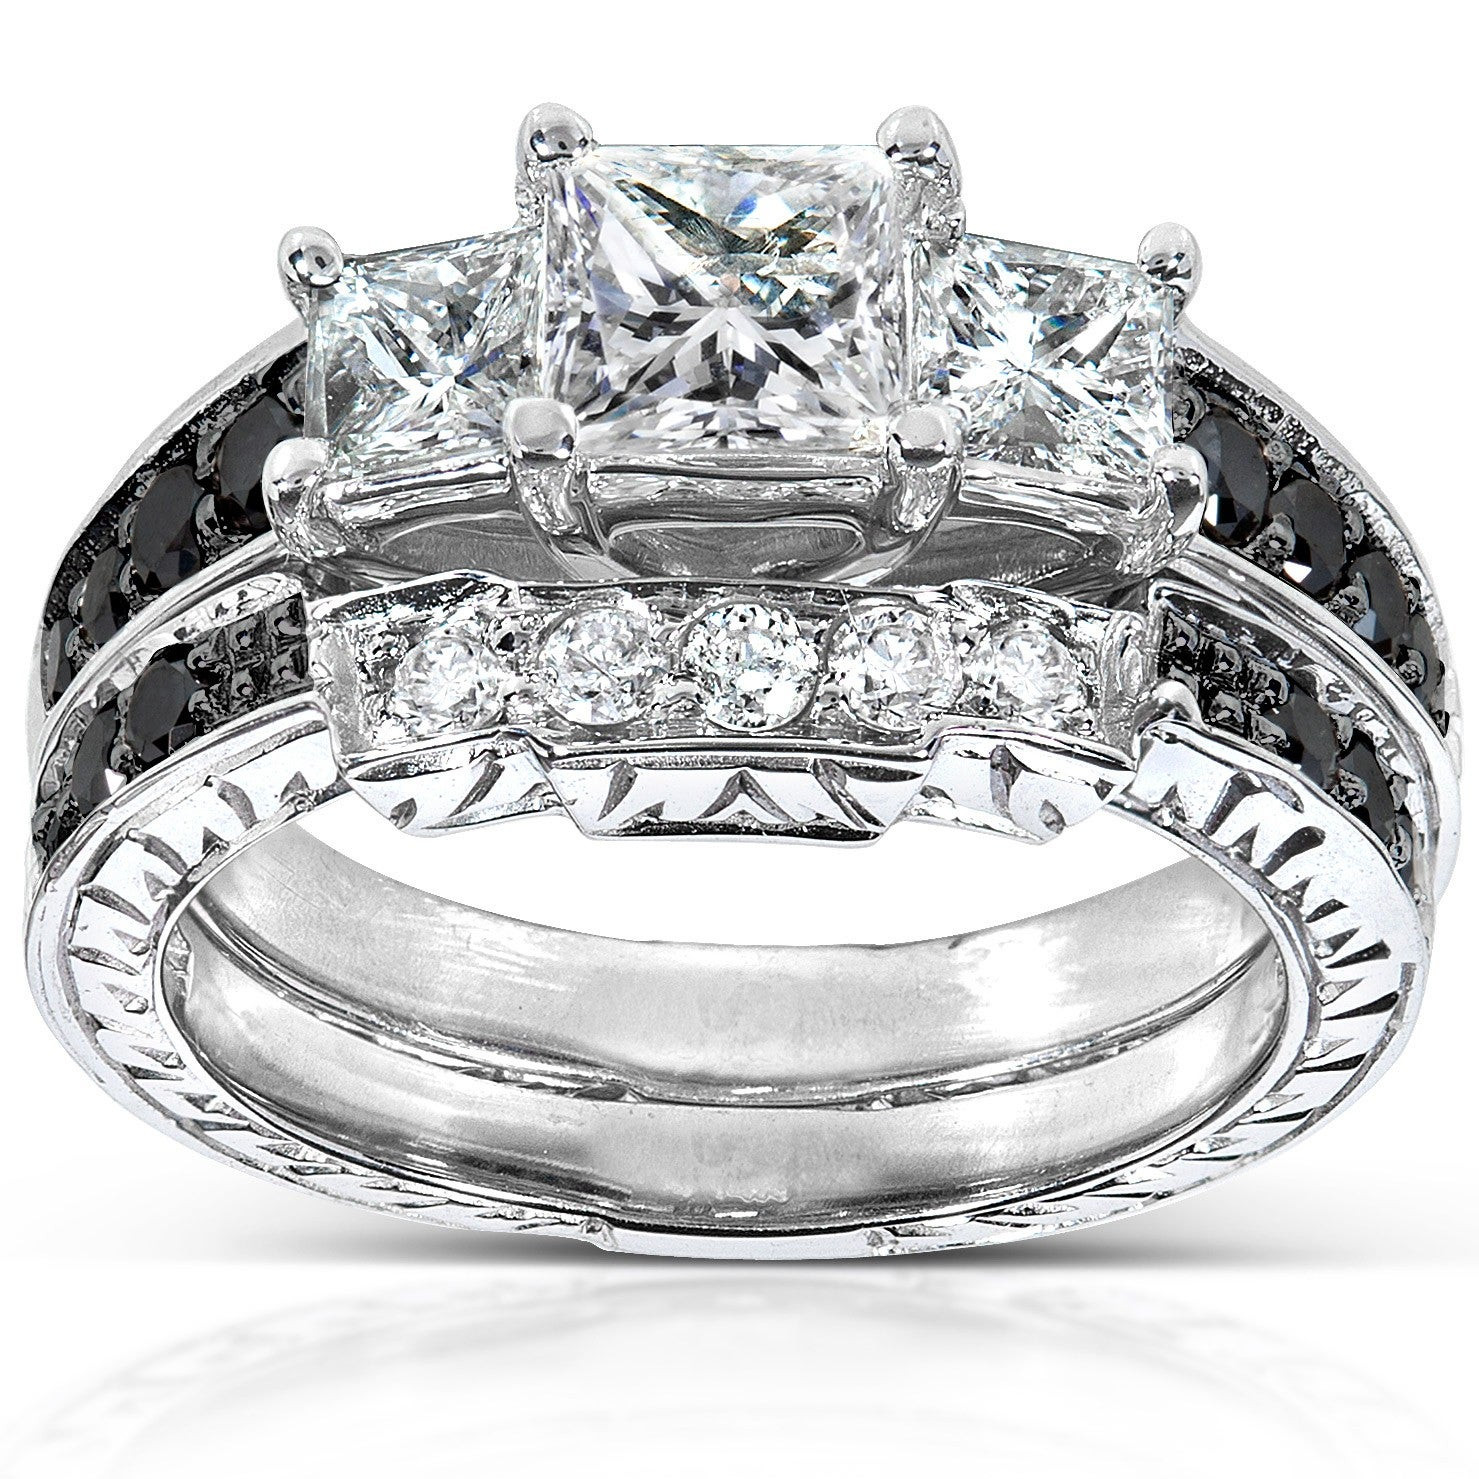 Black Gold Wedding Ring Sets
 Annello 14k White Gold 1 3 5ct TDW Black and White Diamond